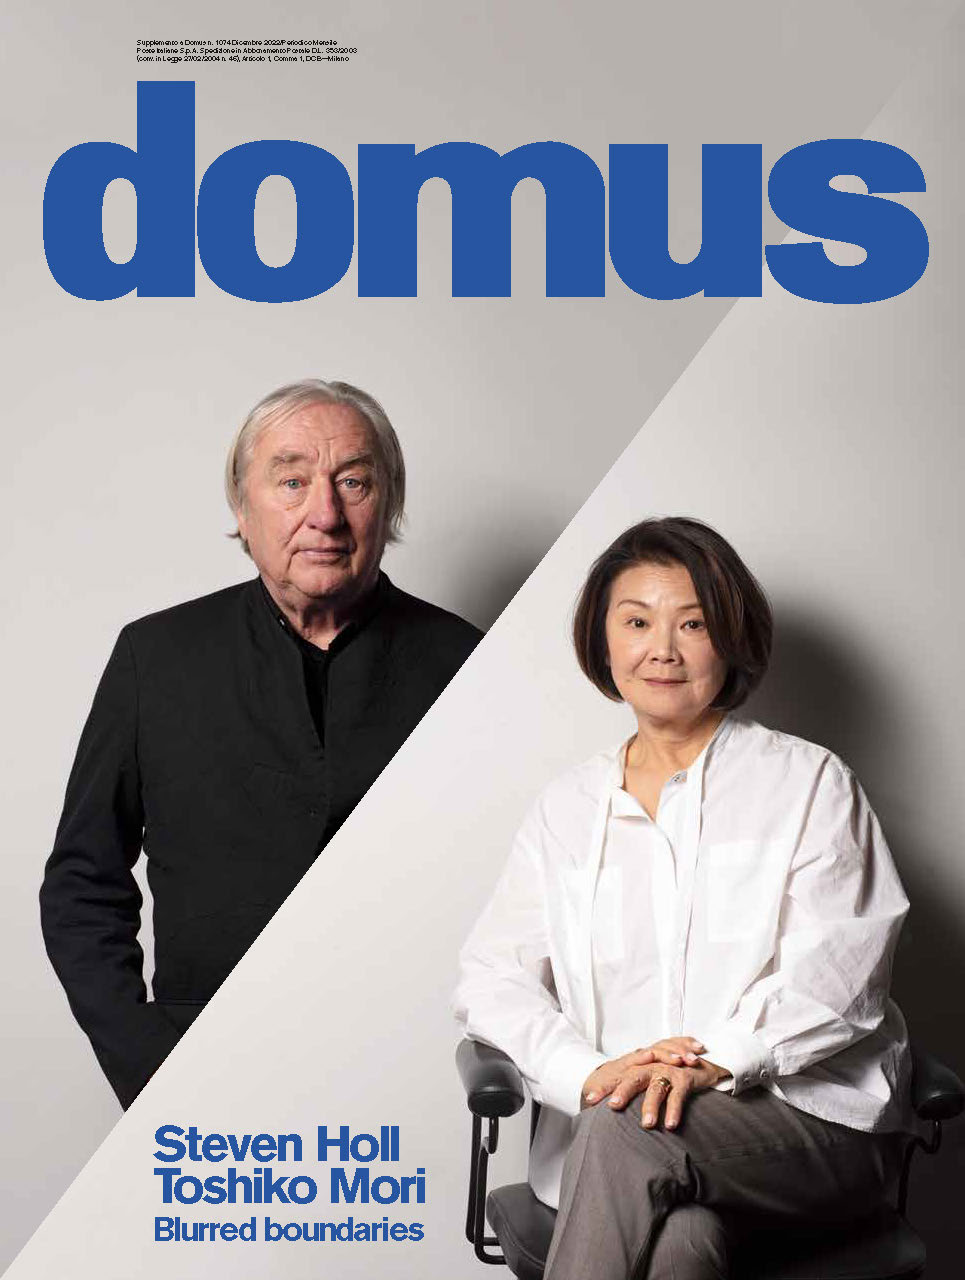 Steven Holl and Toshiko Mori 2023 Guest Editors of Domus Magazine